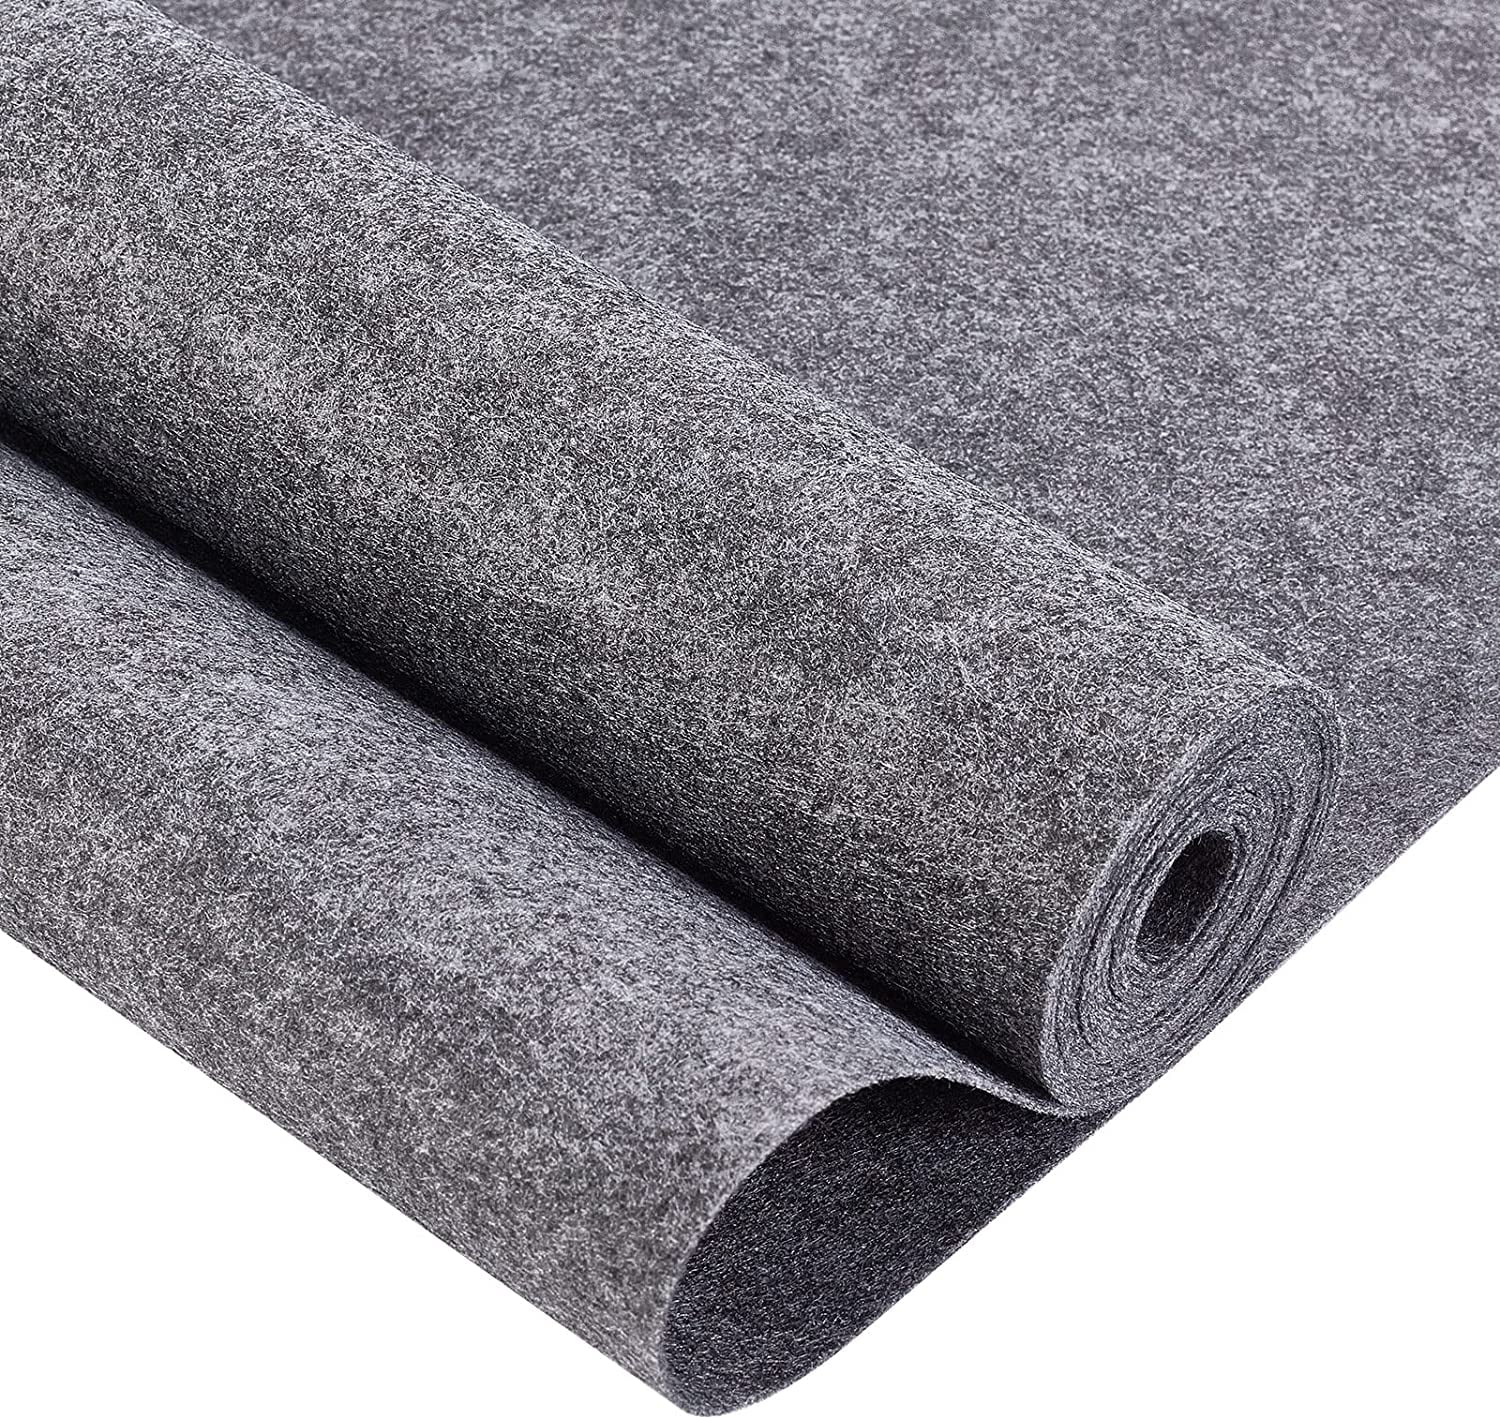 10FT 15.75 Inch Wide Dark Gray Felt Fabric Sheet Nonwoven Felt Roll Padding  Felt Fabric for Cushion DIY Craft Patchwork Sewing 0.9mm Thick